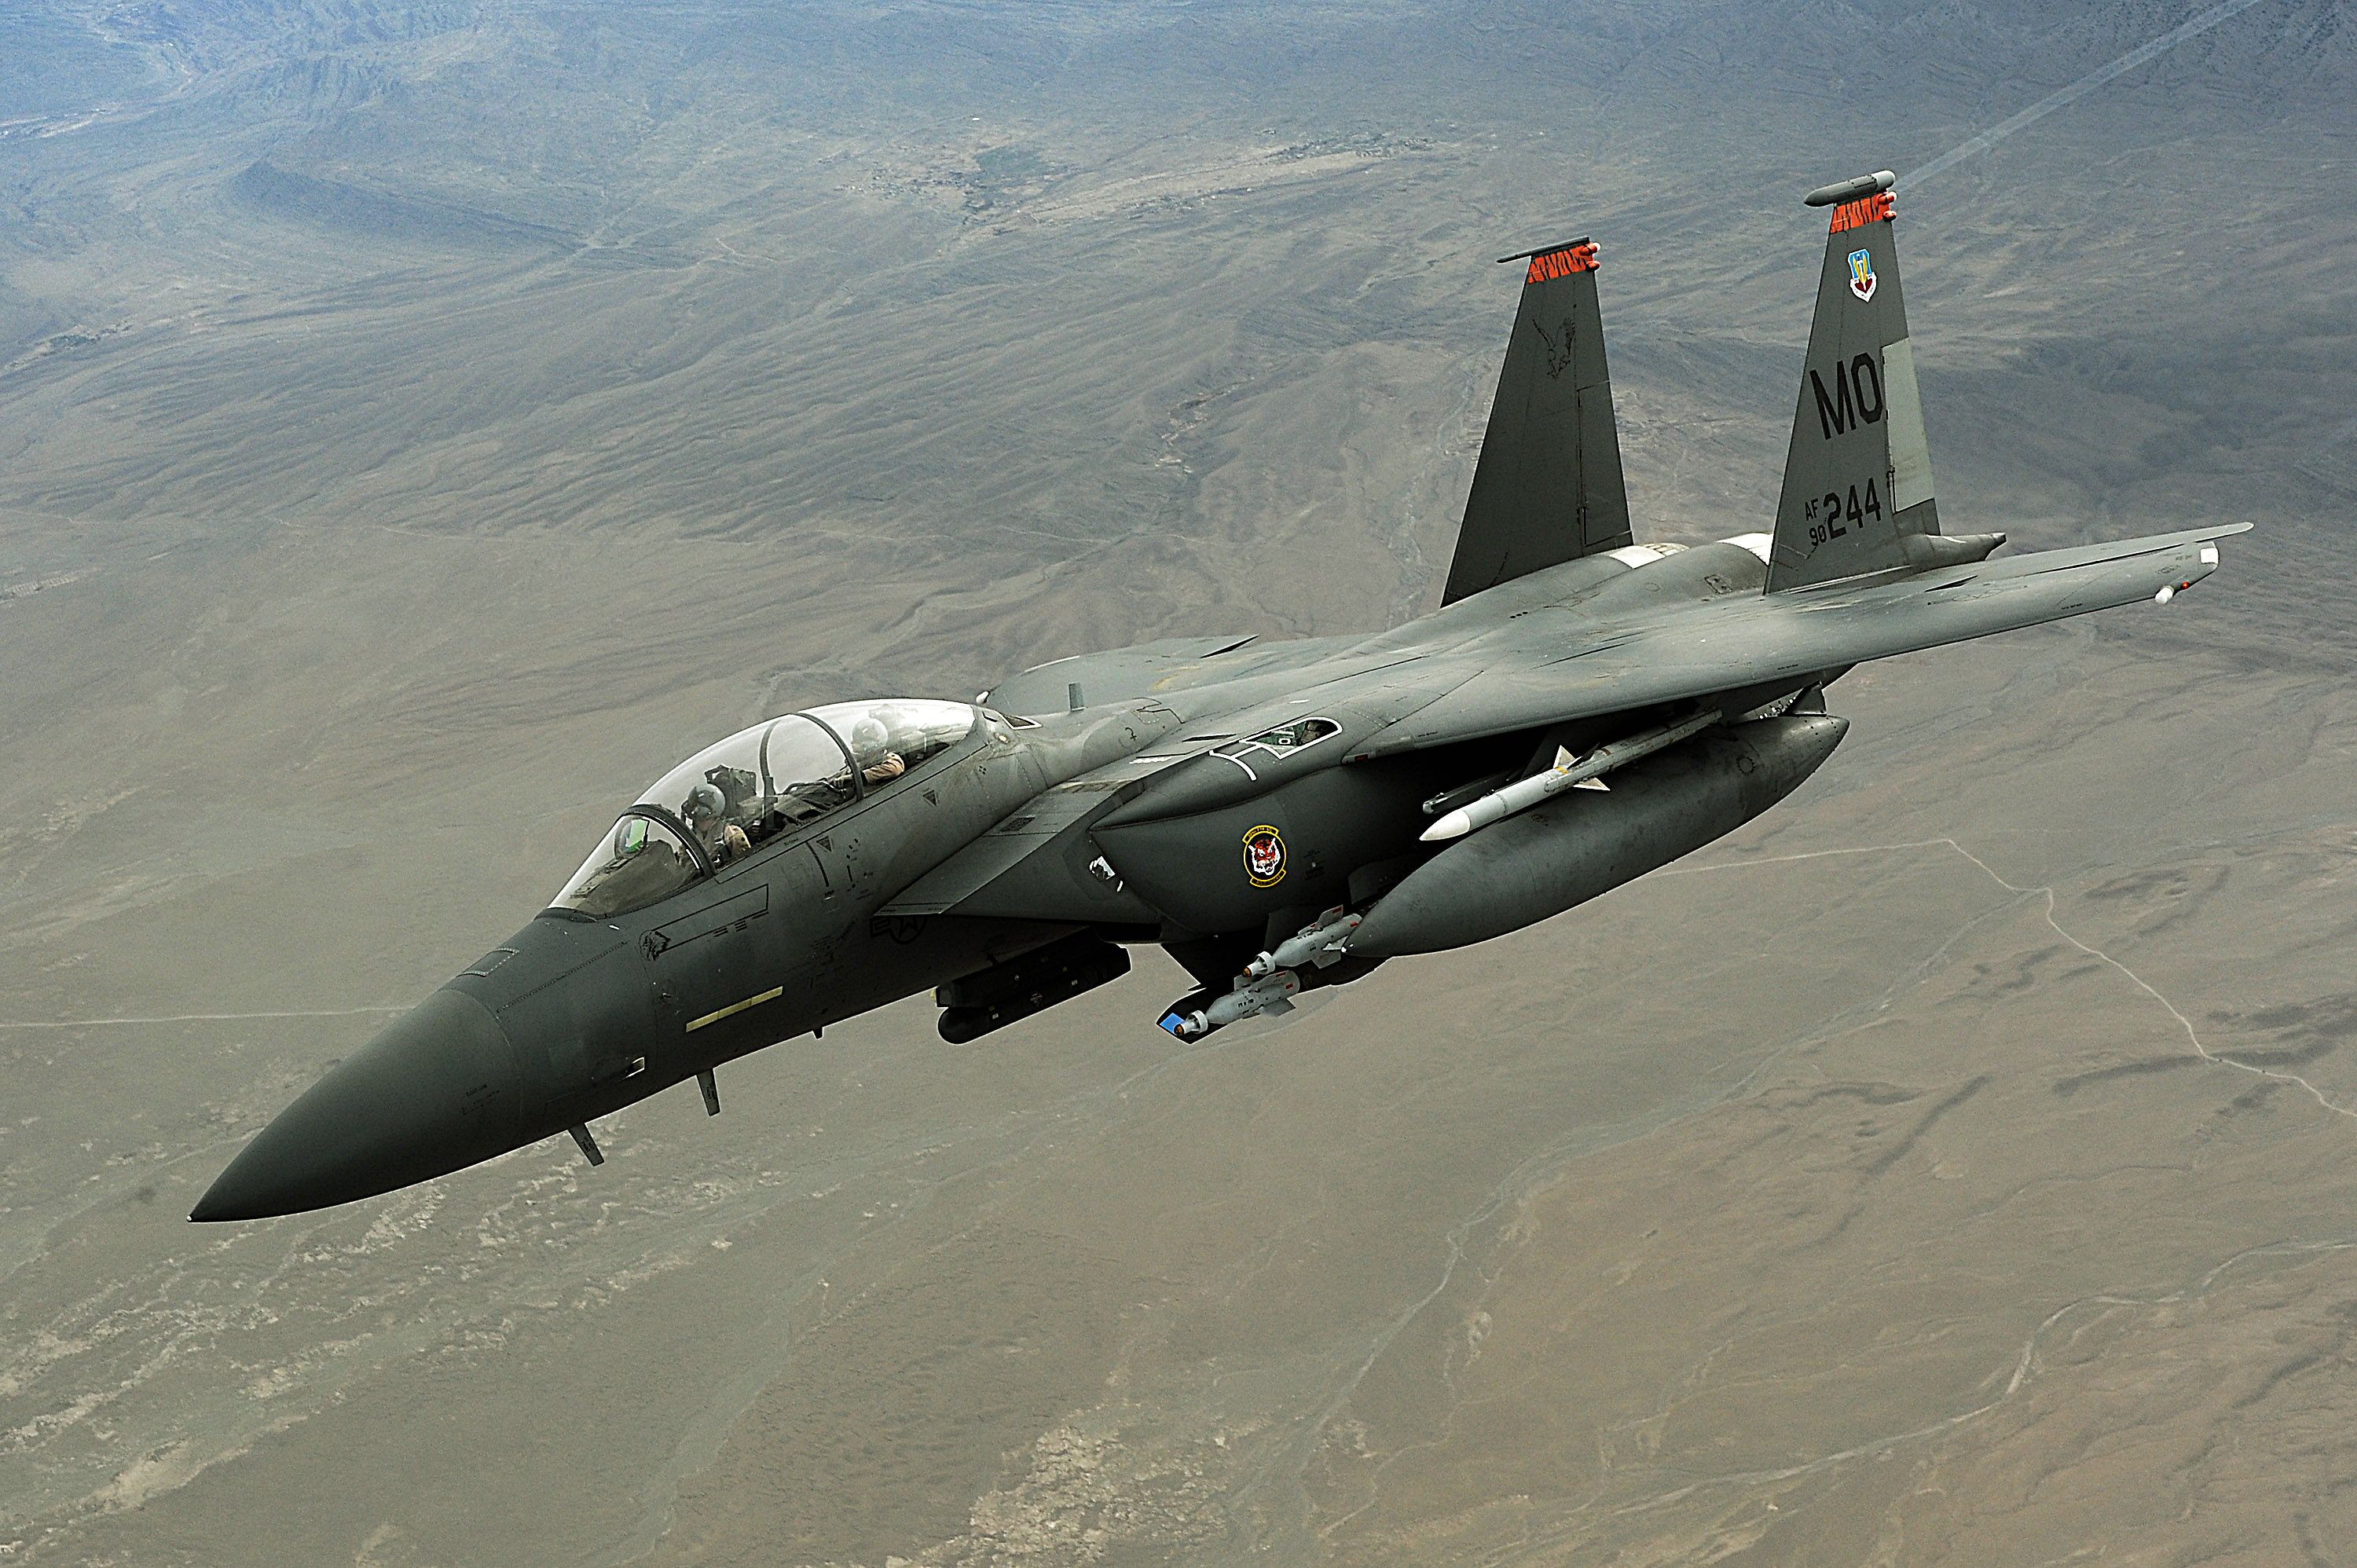 File:F-15E - Controlling The Sky.JPG - Wikipedia, the free encyclopedia